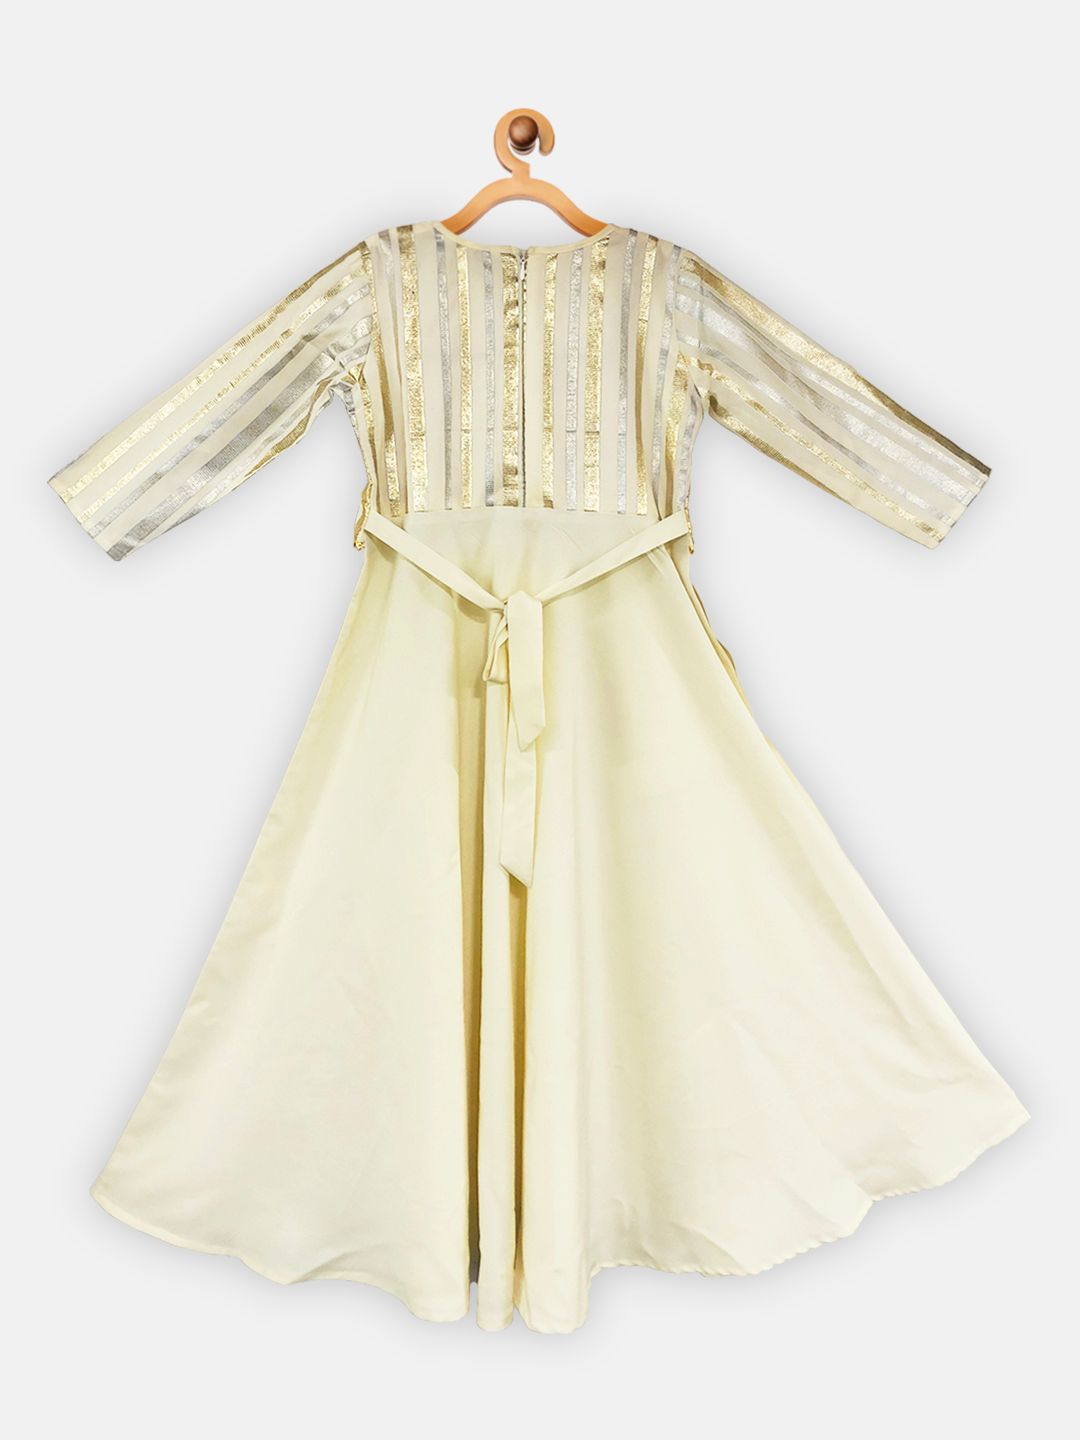 Cream Crepe Gold Foil Printed Girls Ethnic Dress